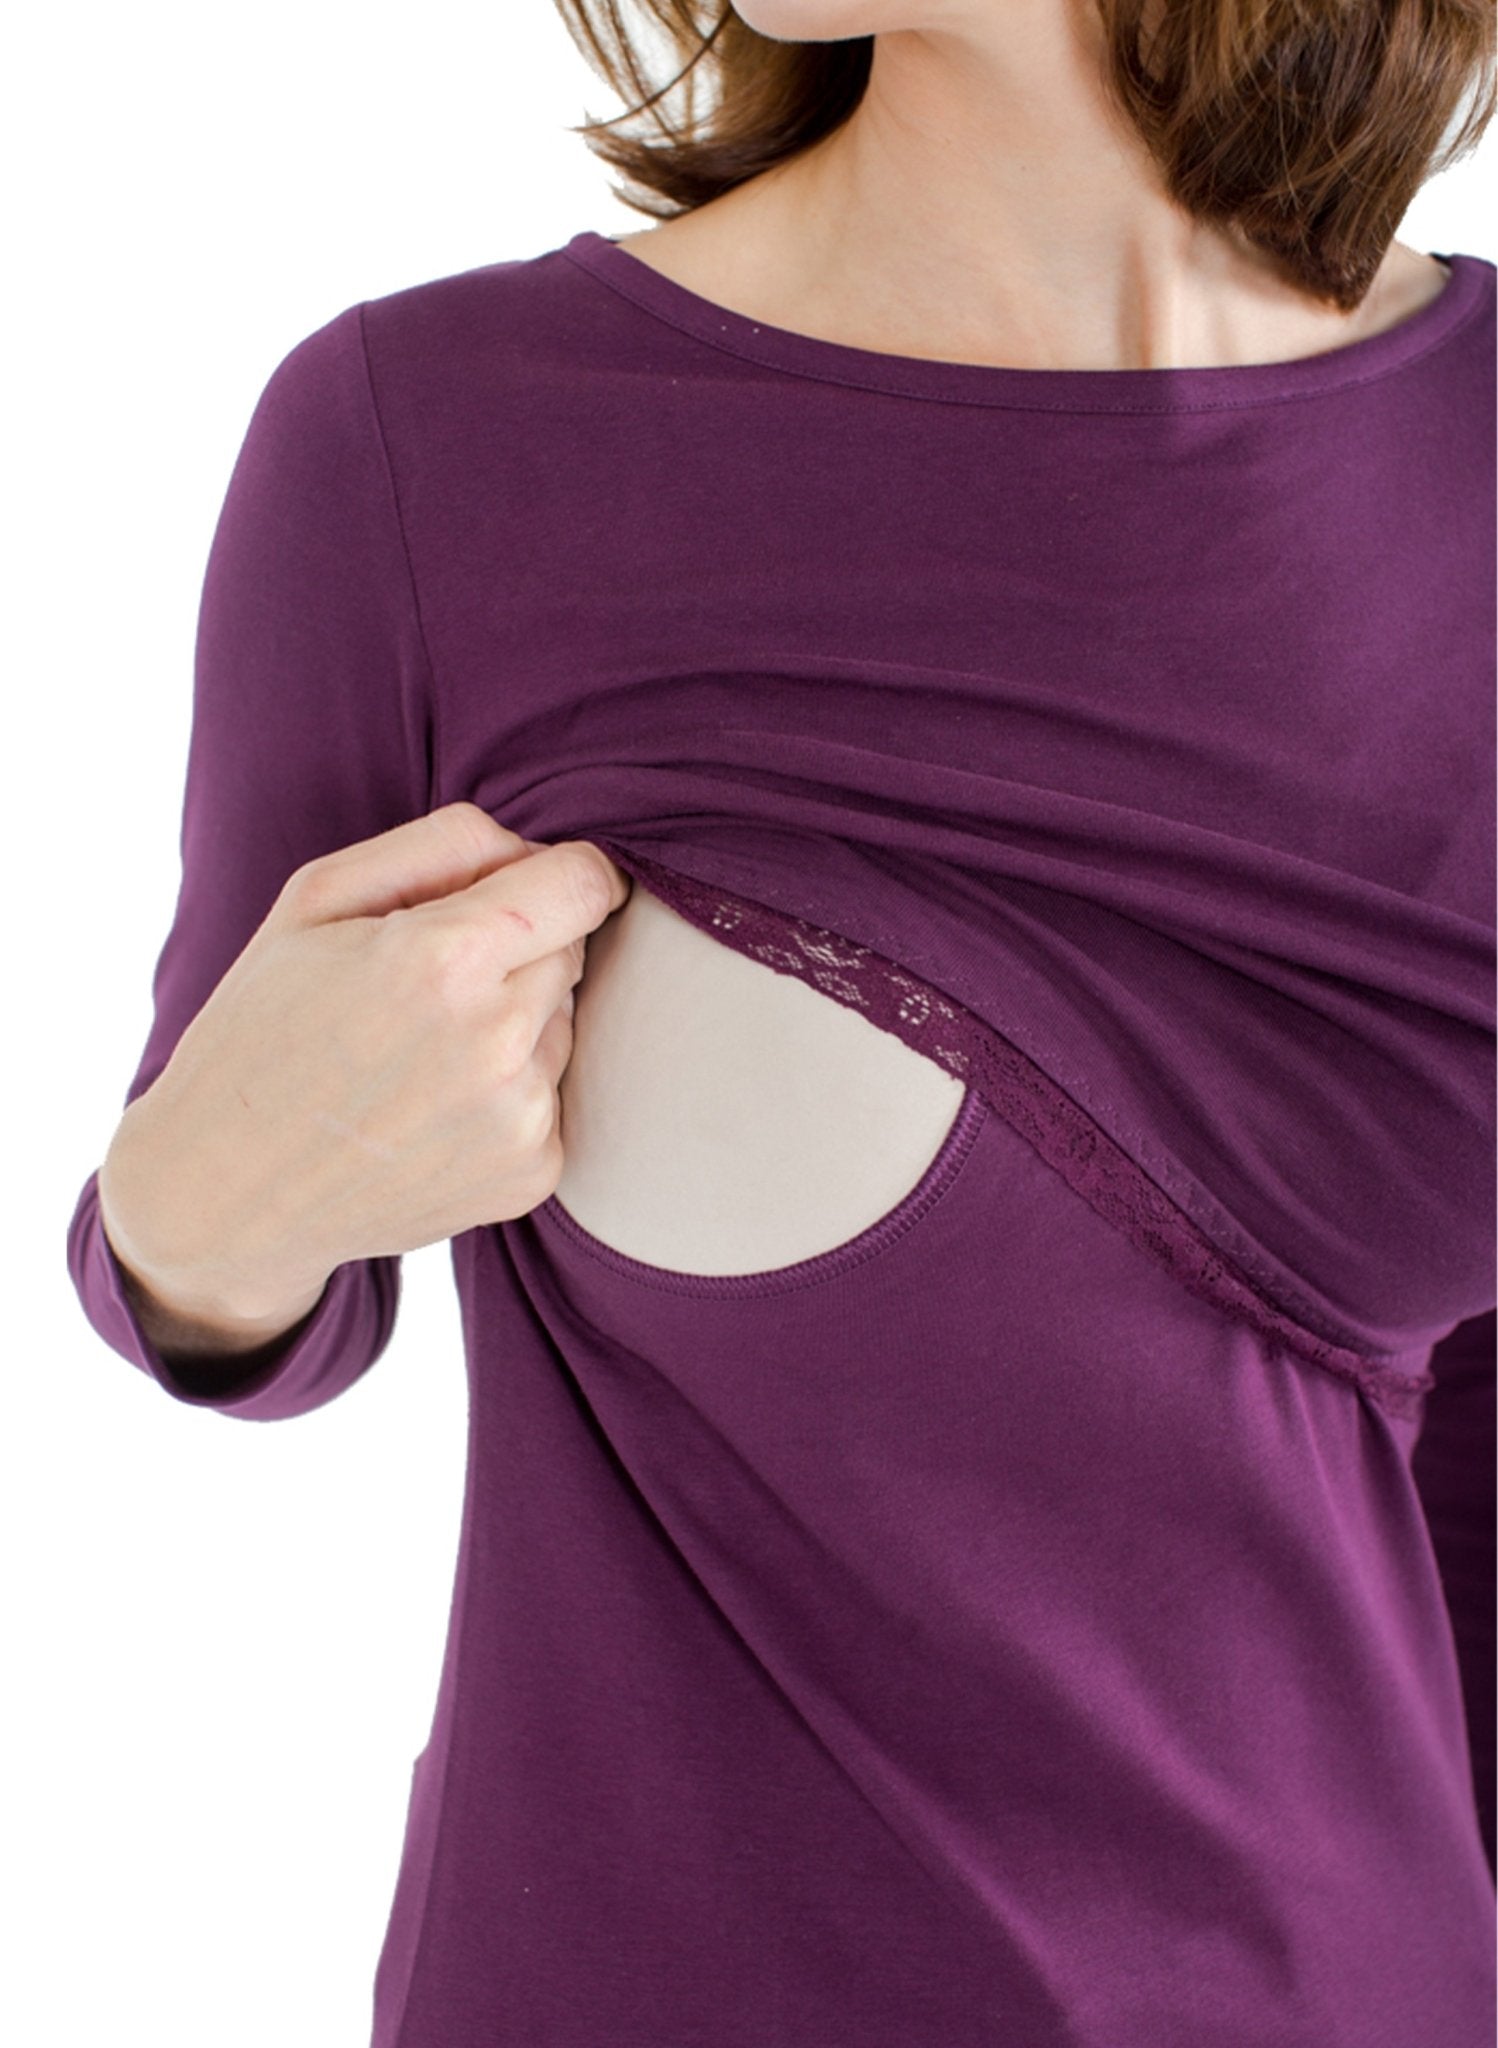 Long Sleeves Breastfeeding Shirt - Plum - Mums and Bumps